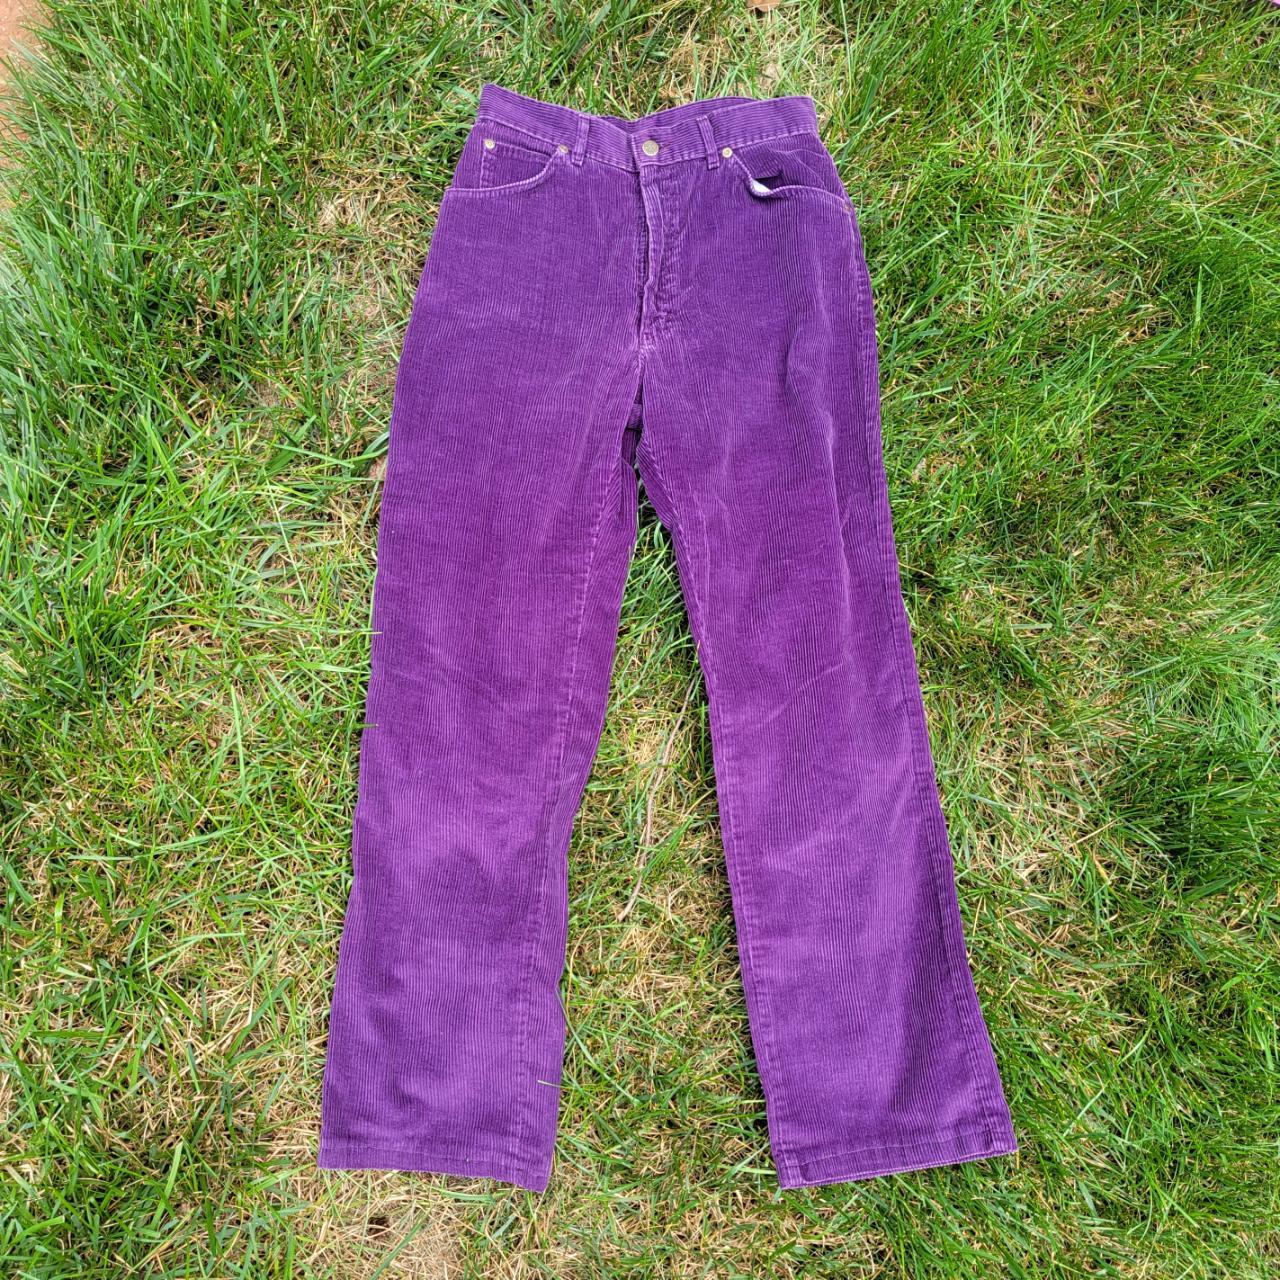 LEE purple corduroy jeans vintage 90s high waisted... - Depop